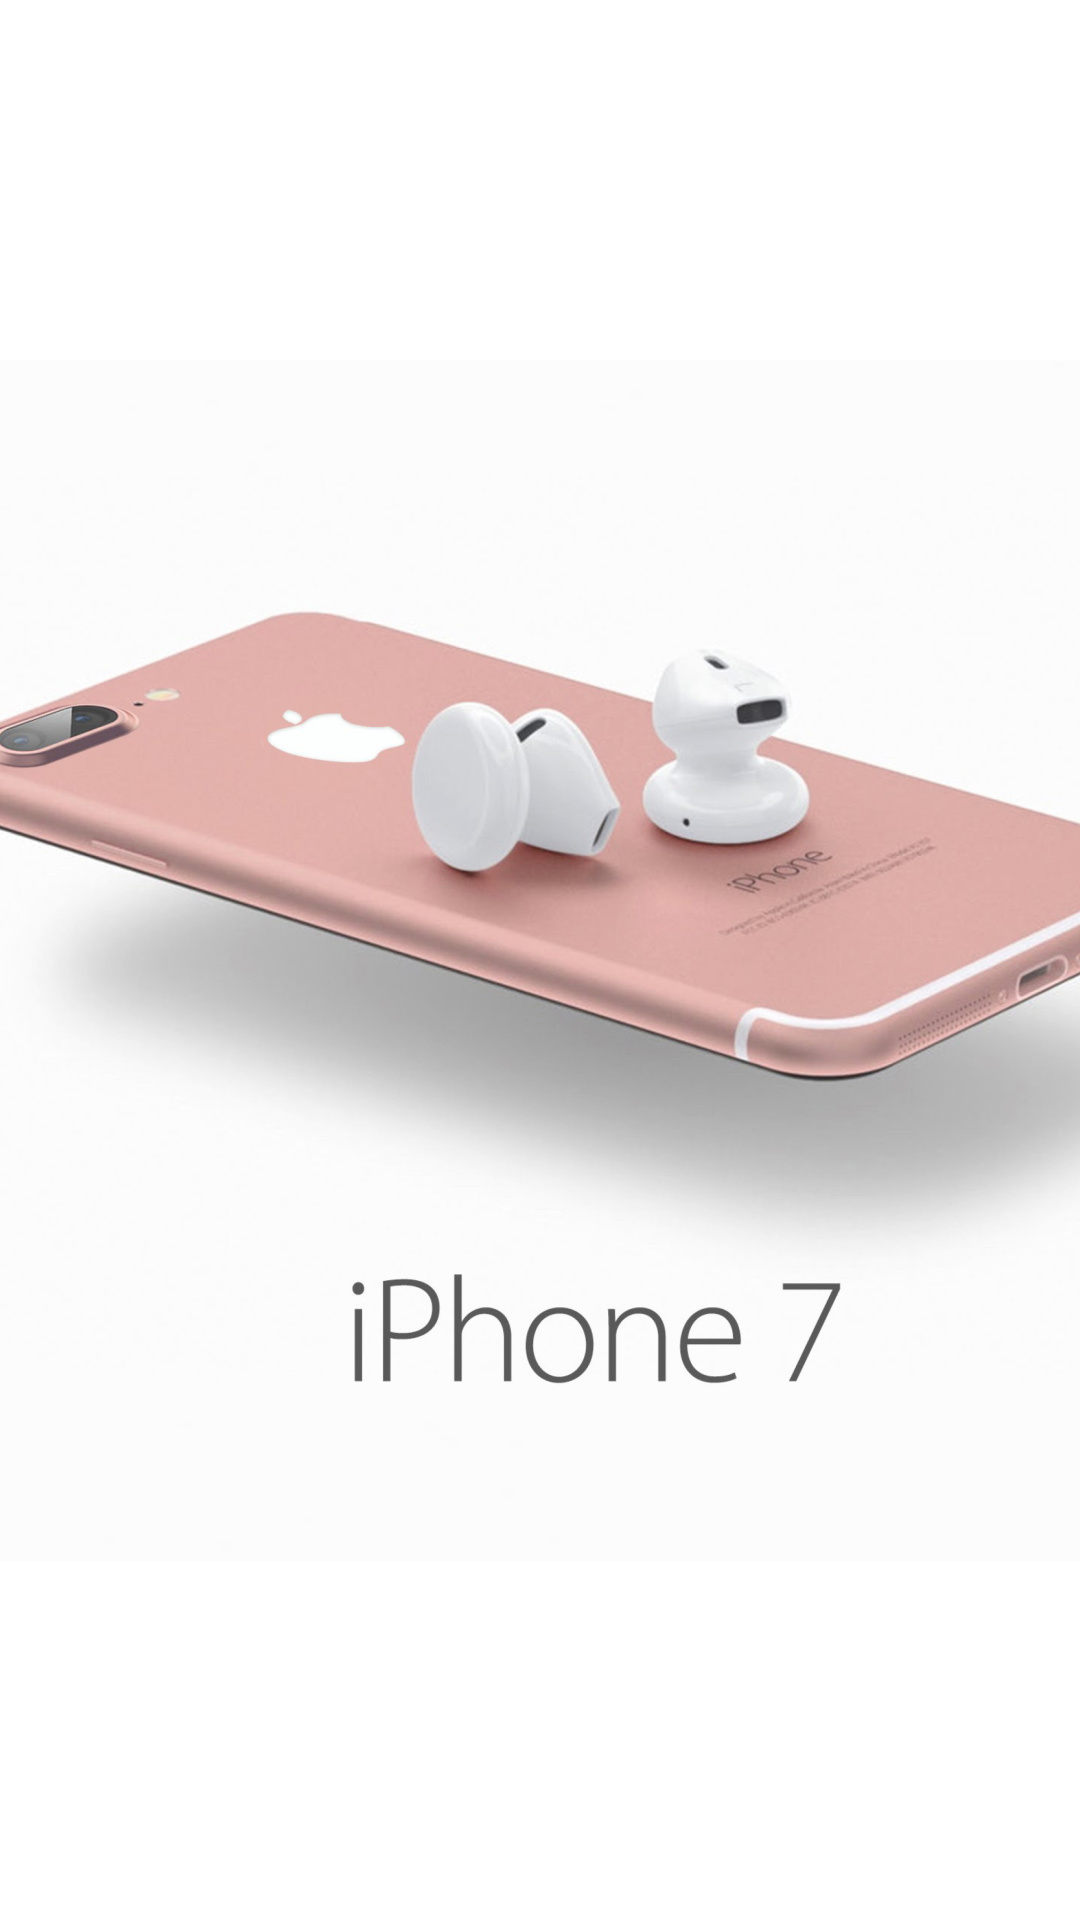 Apple iPhone 7 32GB Pink wallpaper 1080x1920